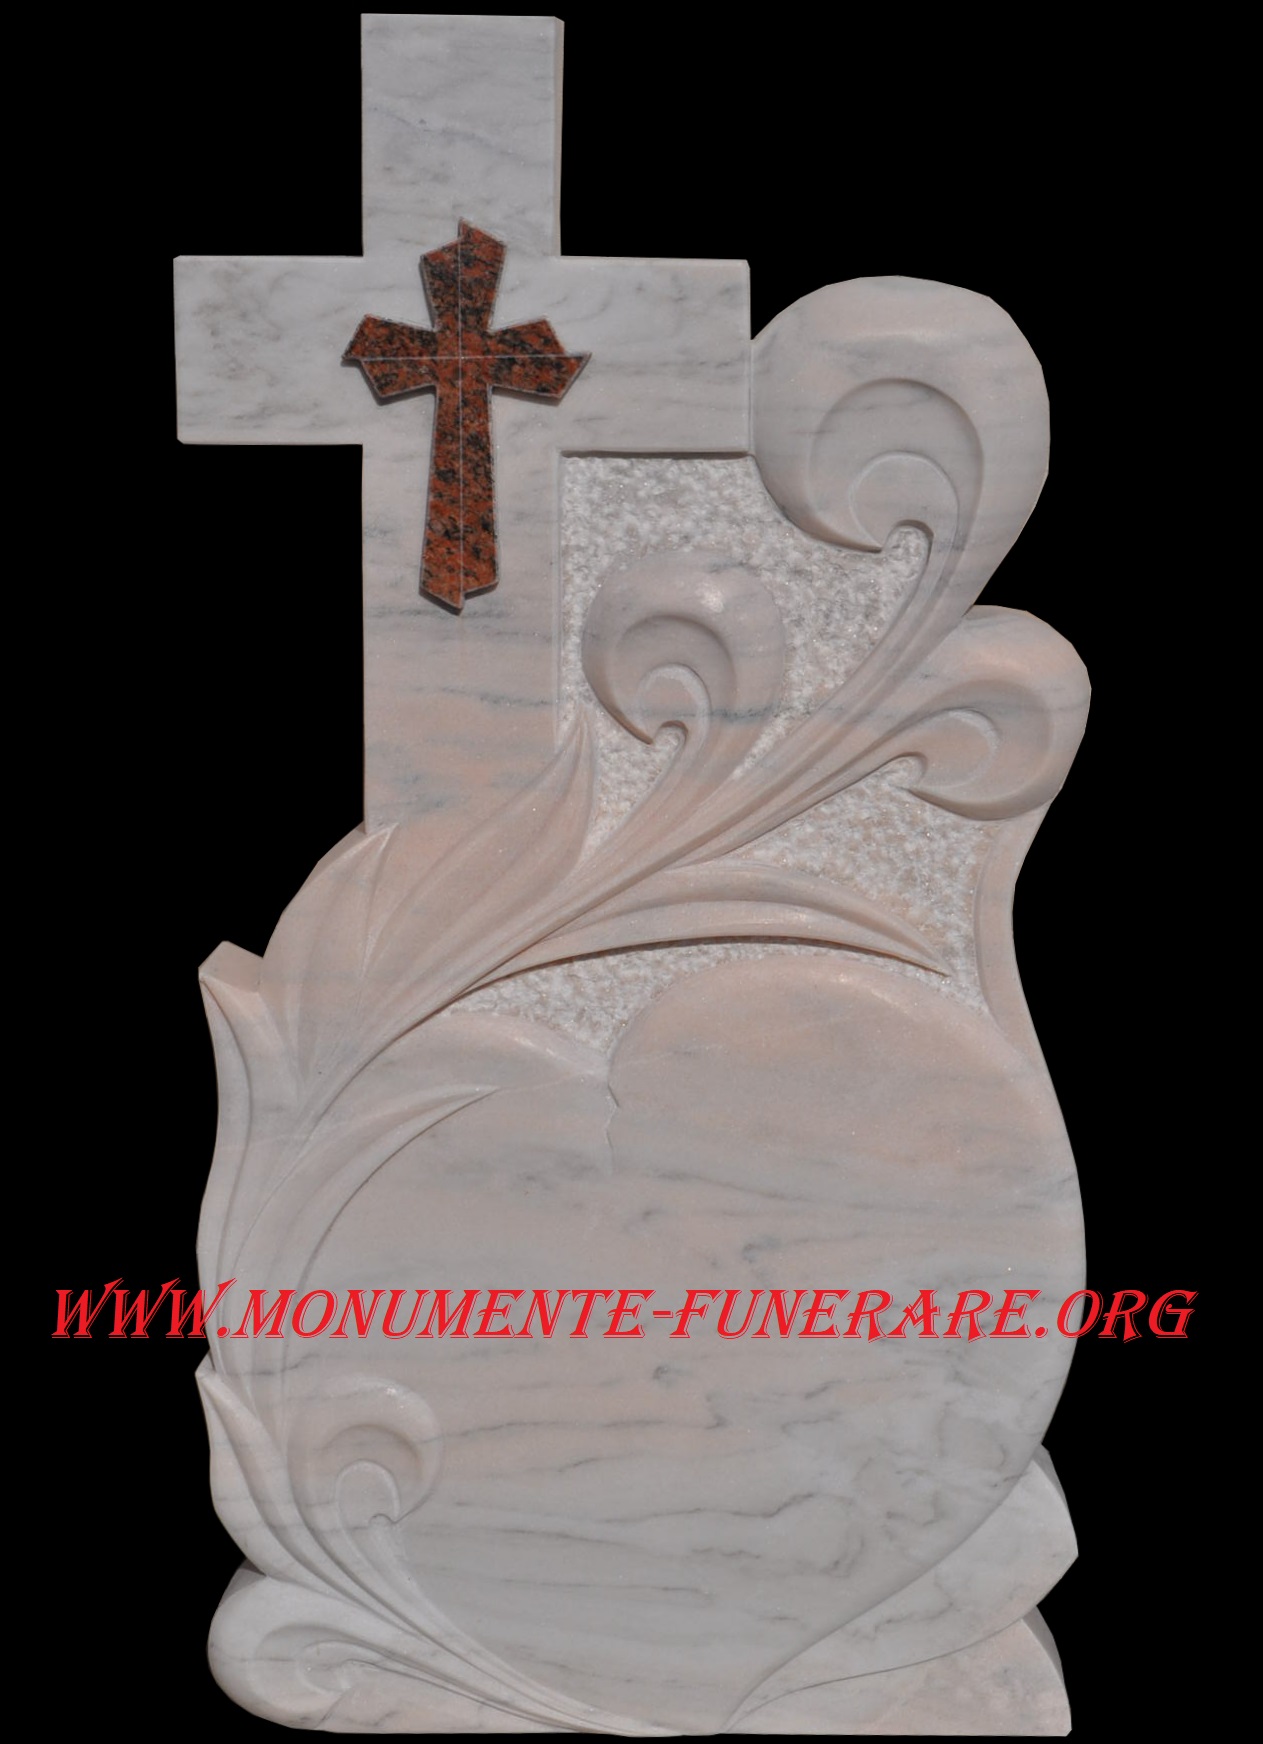 monument funerar model stylaz13